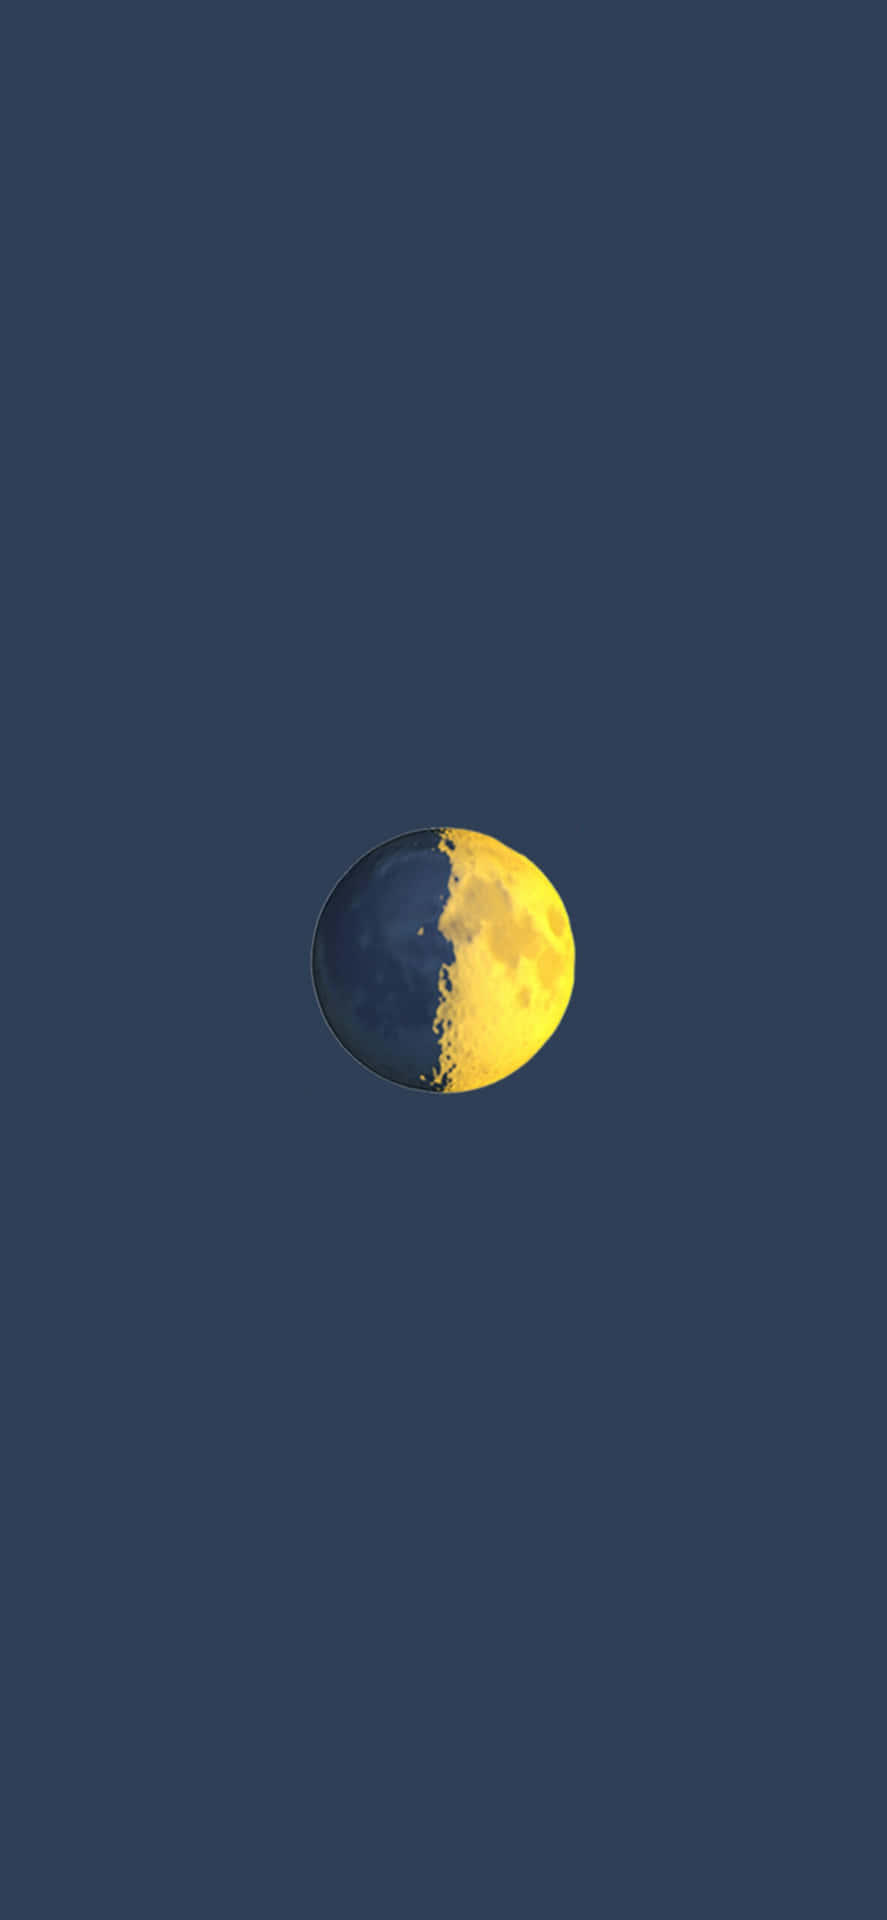 Crescent Moon Against Night Sky Wallpaper